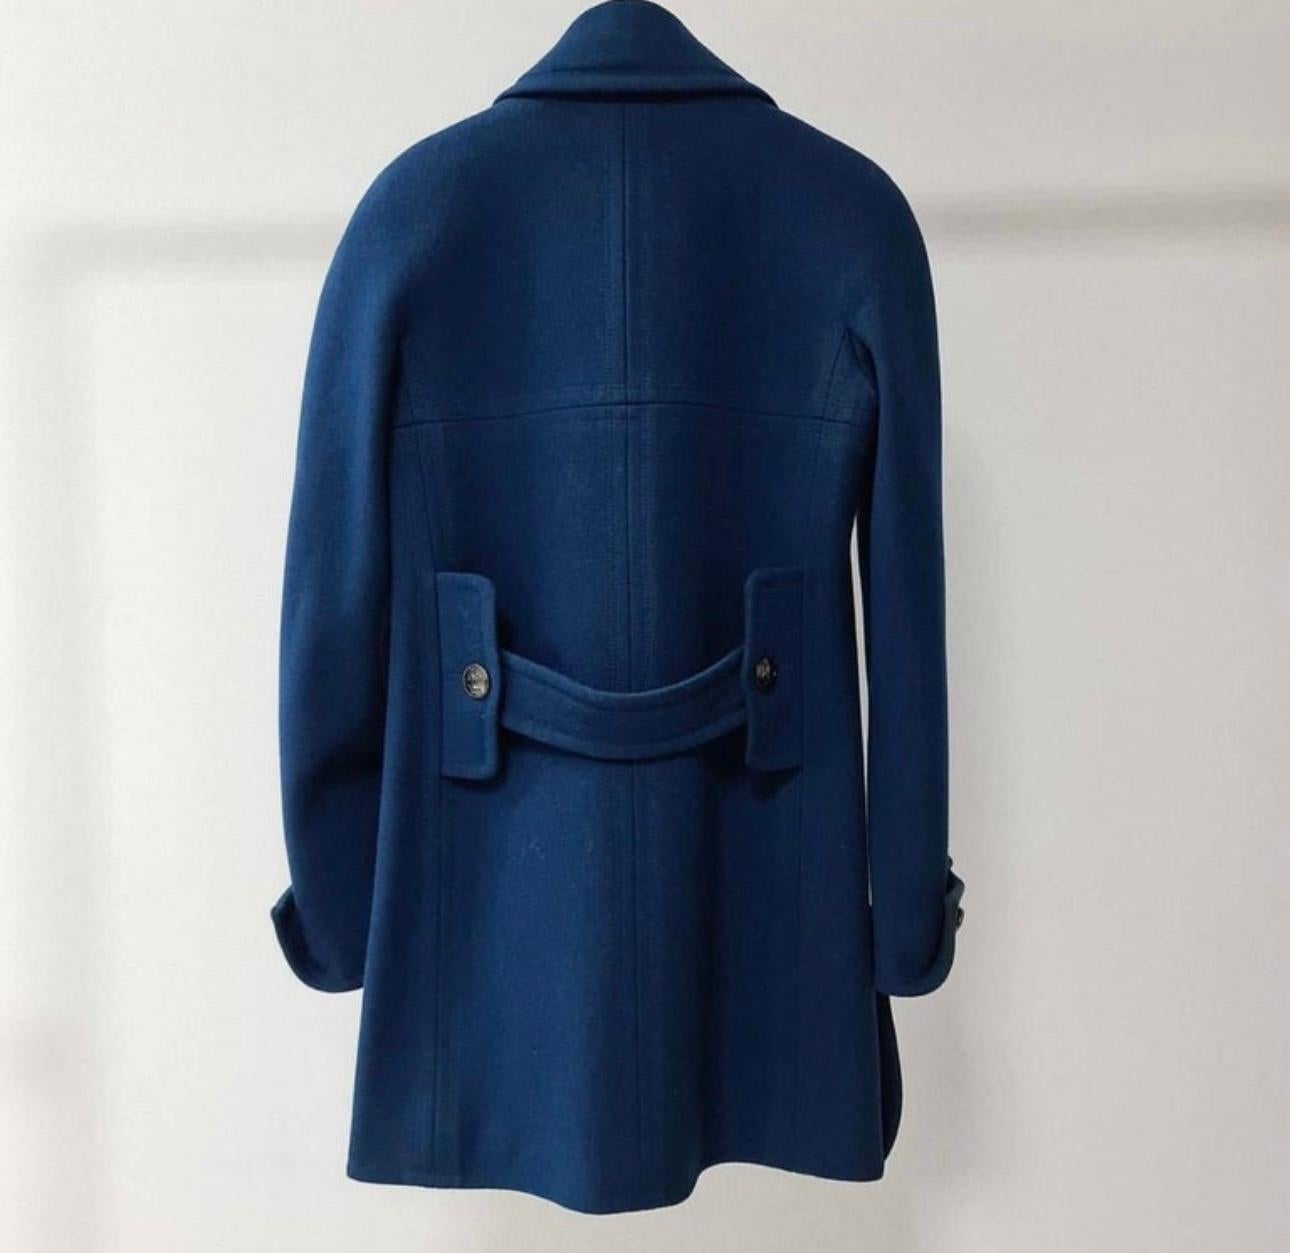 Chanel Cara Delevingne Style Runway Jacket For Sale 5